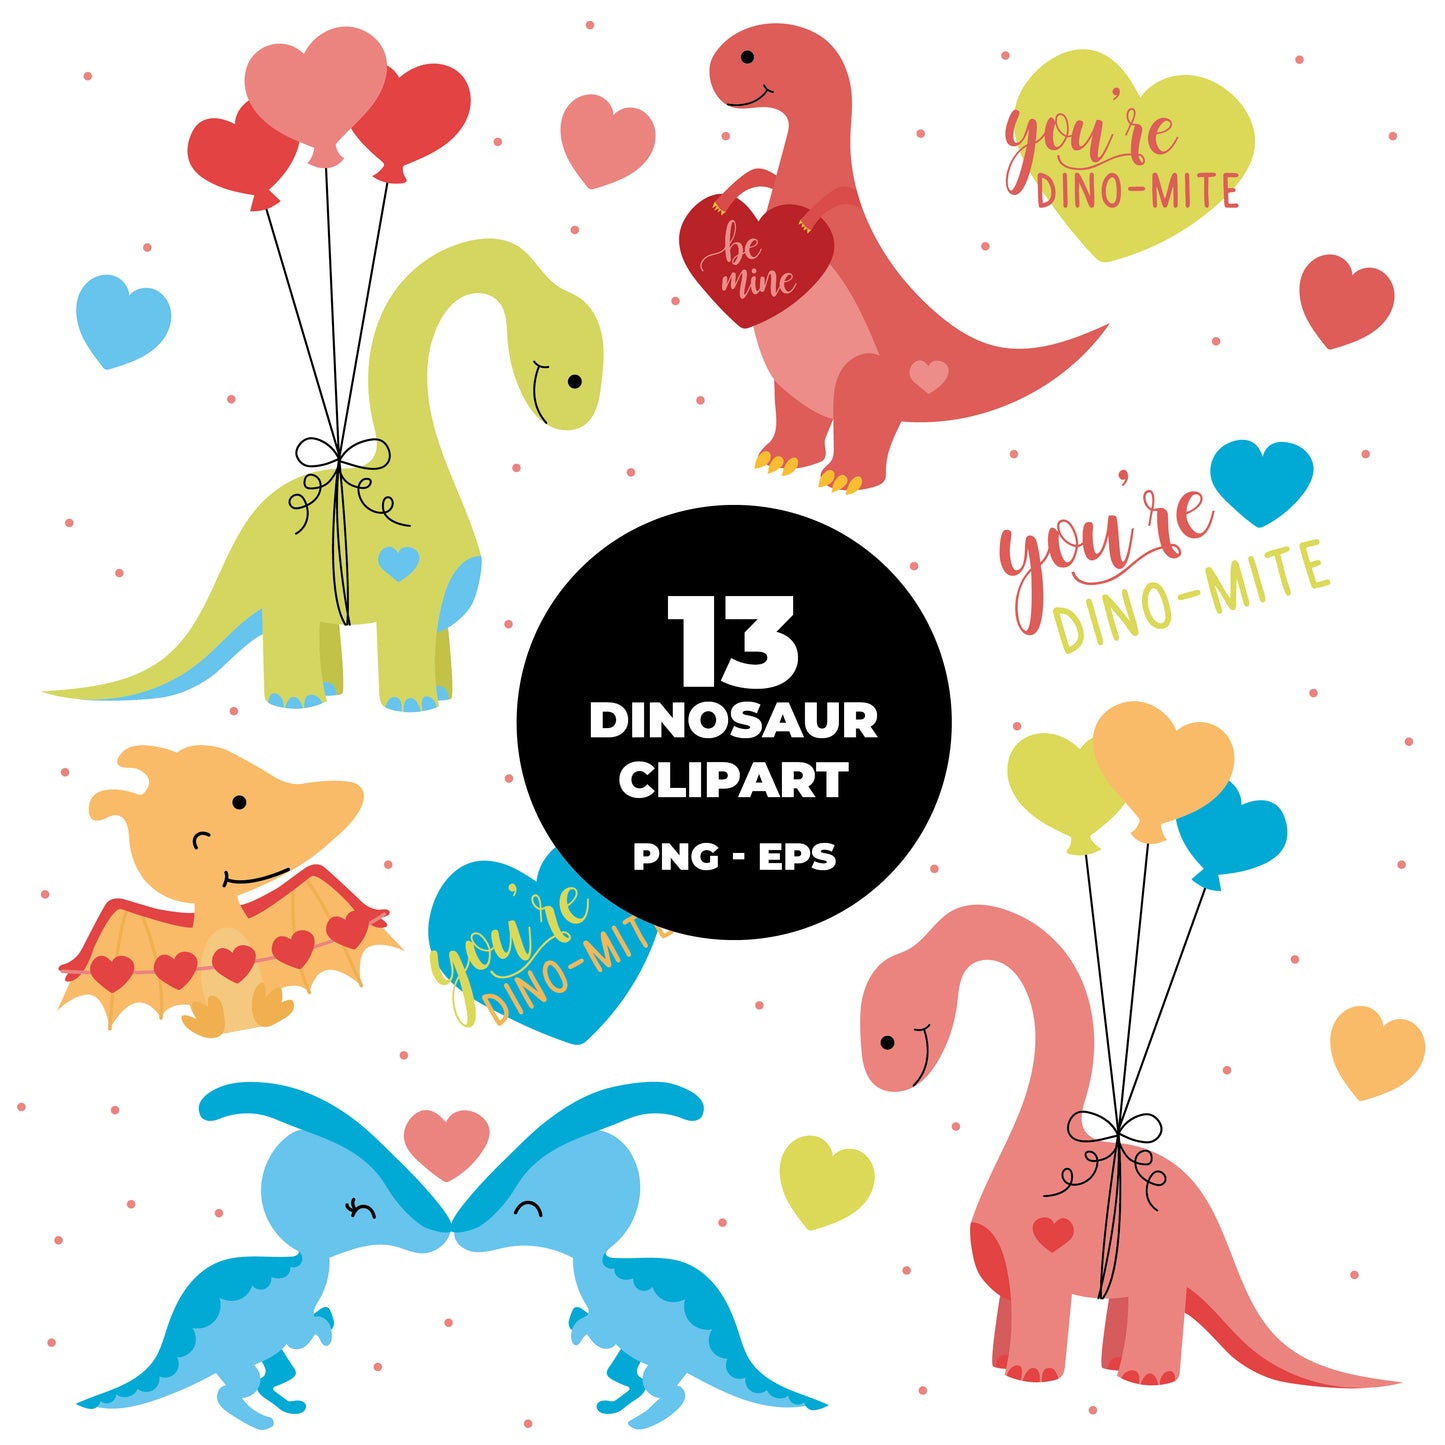 COD790 - Dinosaur clipart, kids dinosaur clipart, t-rex clipart, dino clipart, triceratops clipart files